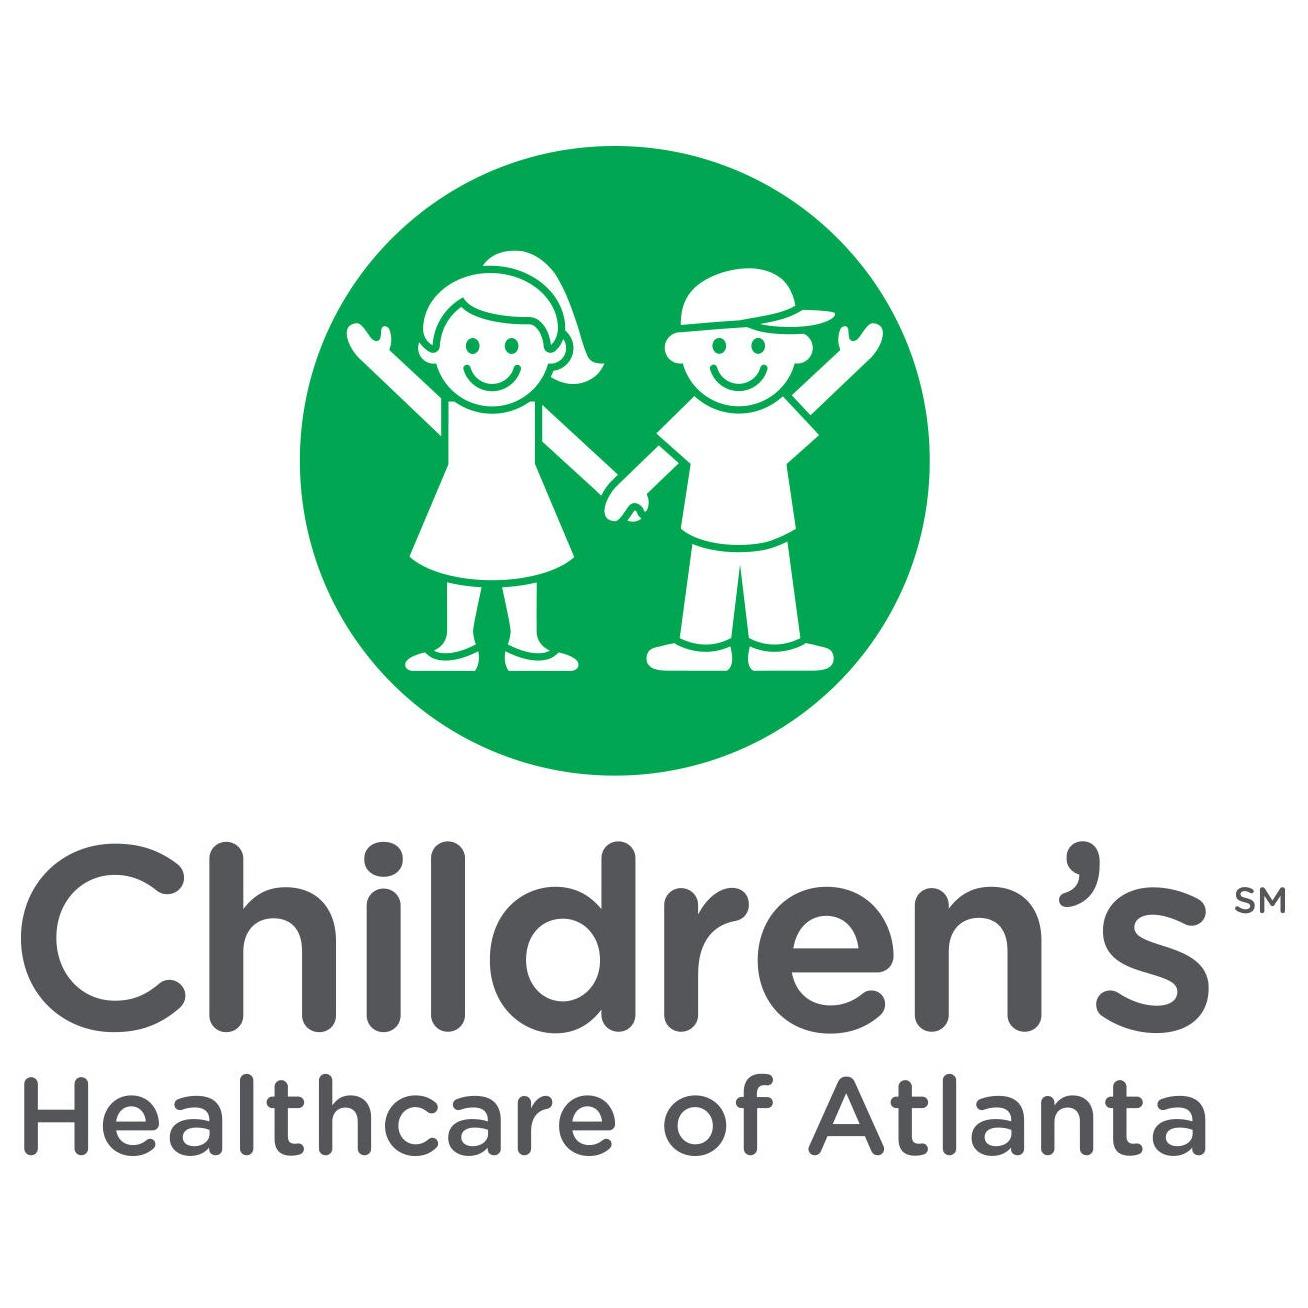 Children's Healthcare of Atlanta Urgent Care Center - Town Center Logo